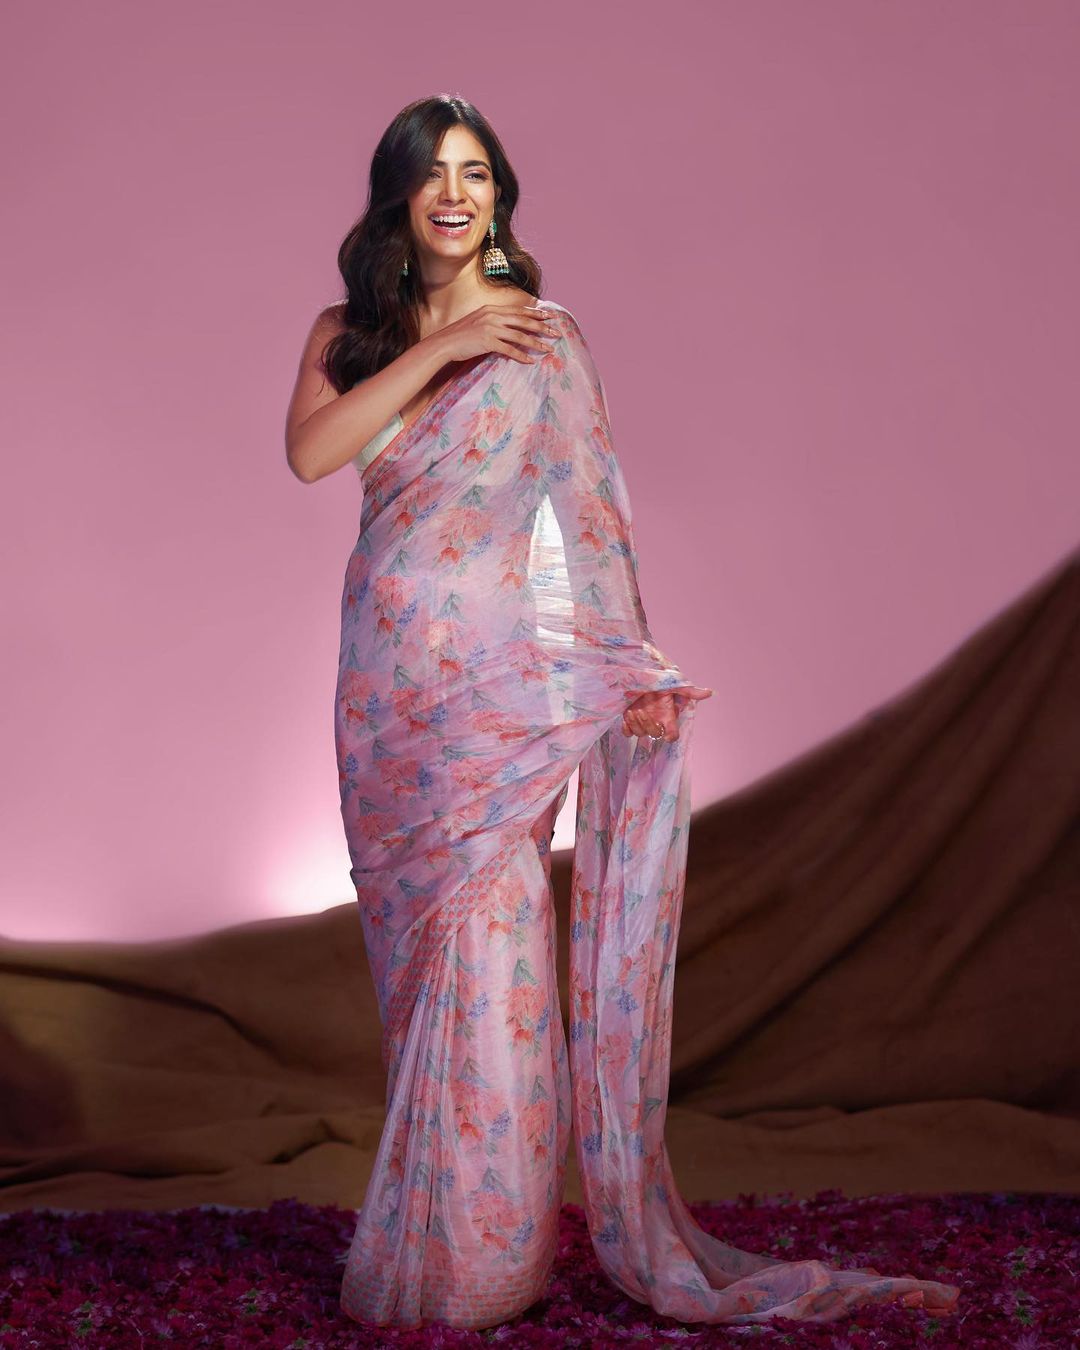 malavika mohanan hot photos in glamour blouse and saree